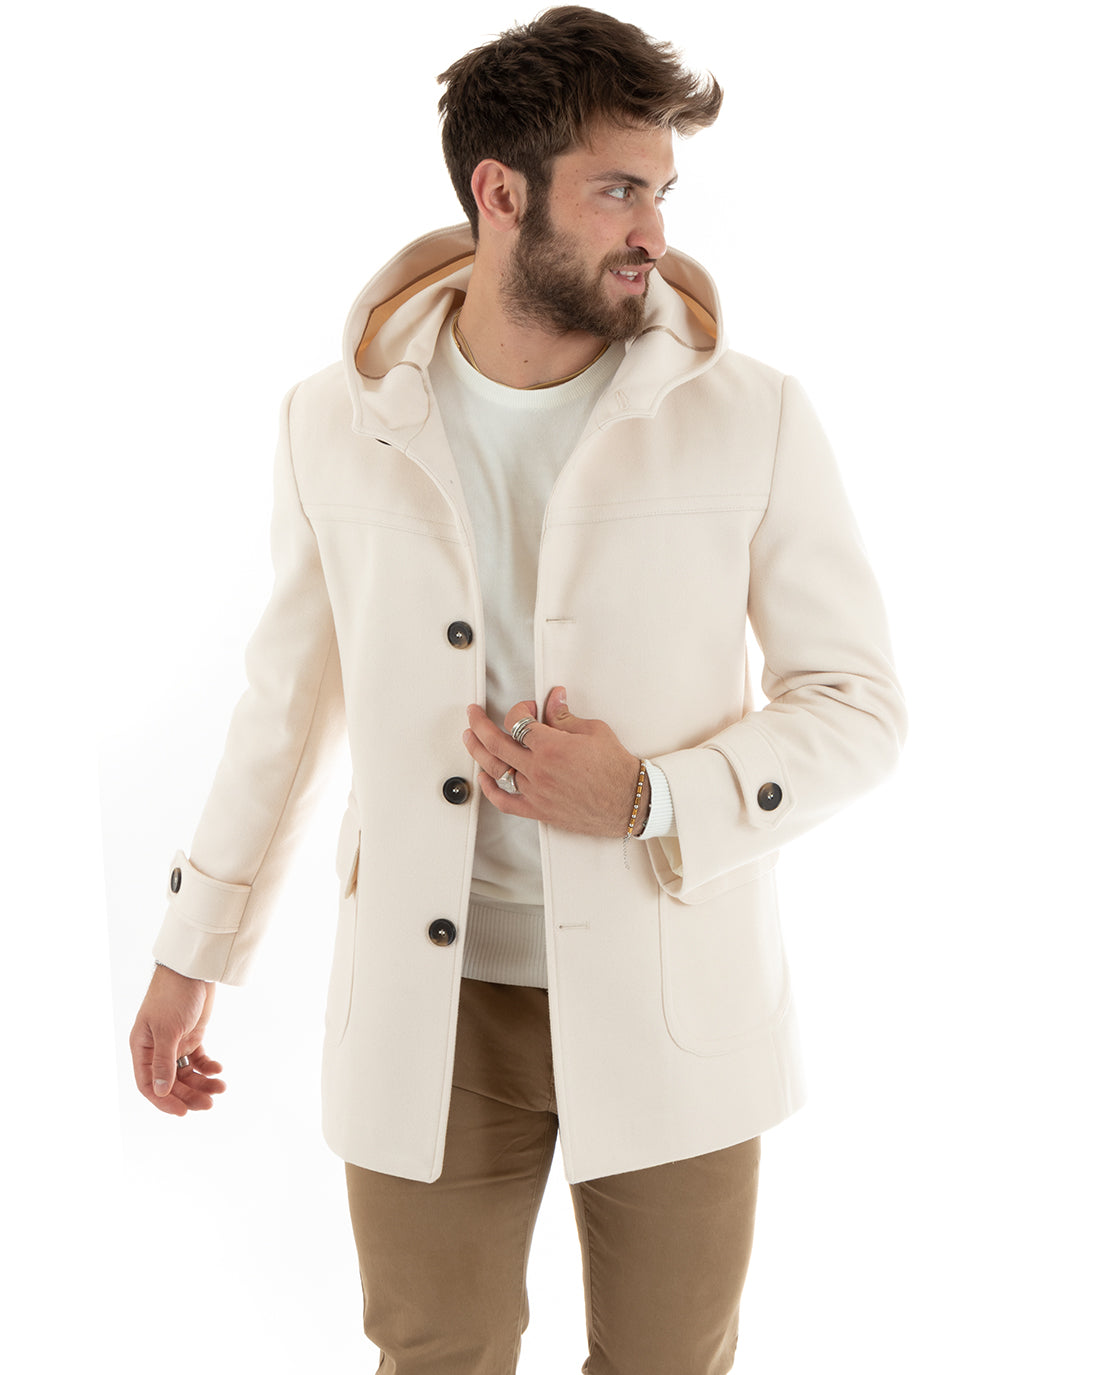 Single-breasted Coat Men's Jacket Jacket With Hood Camel Baronet Elegant GIOSAL-G2700A